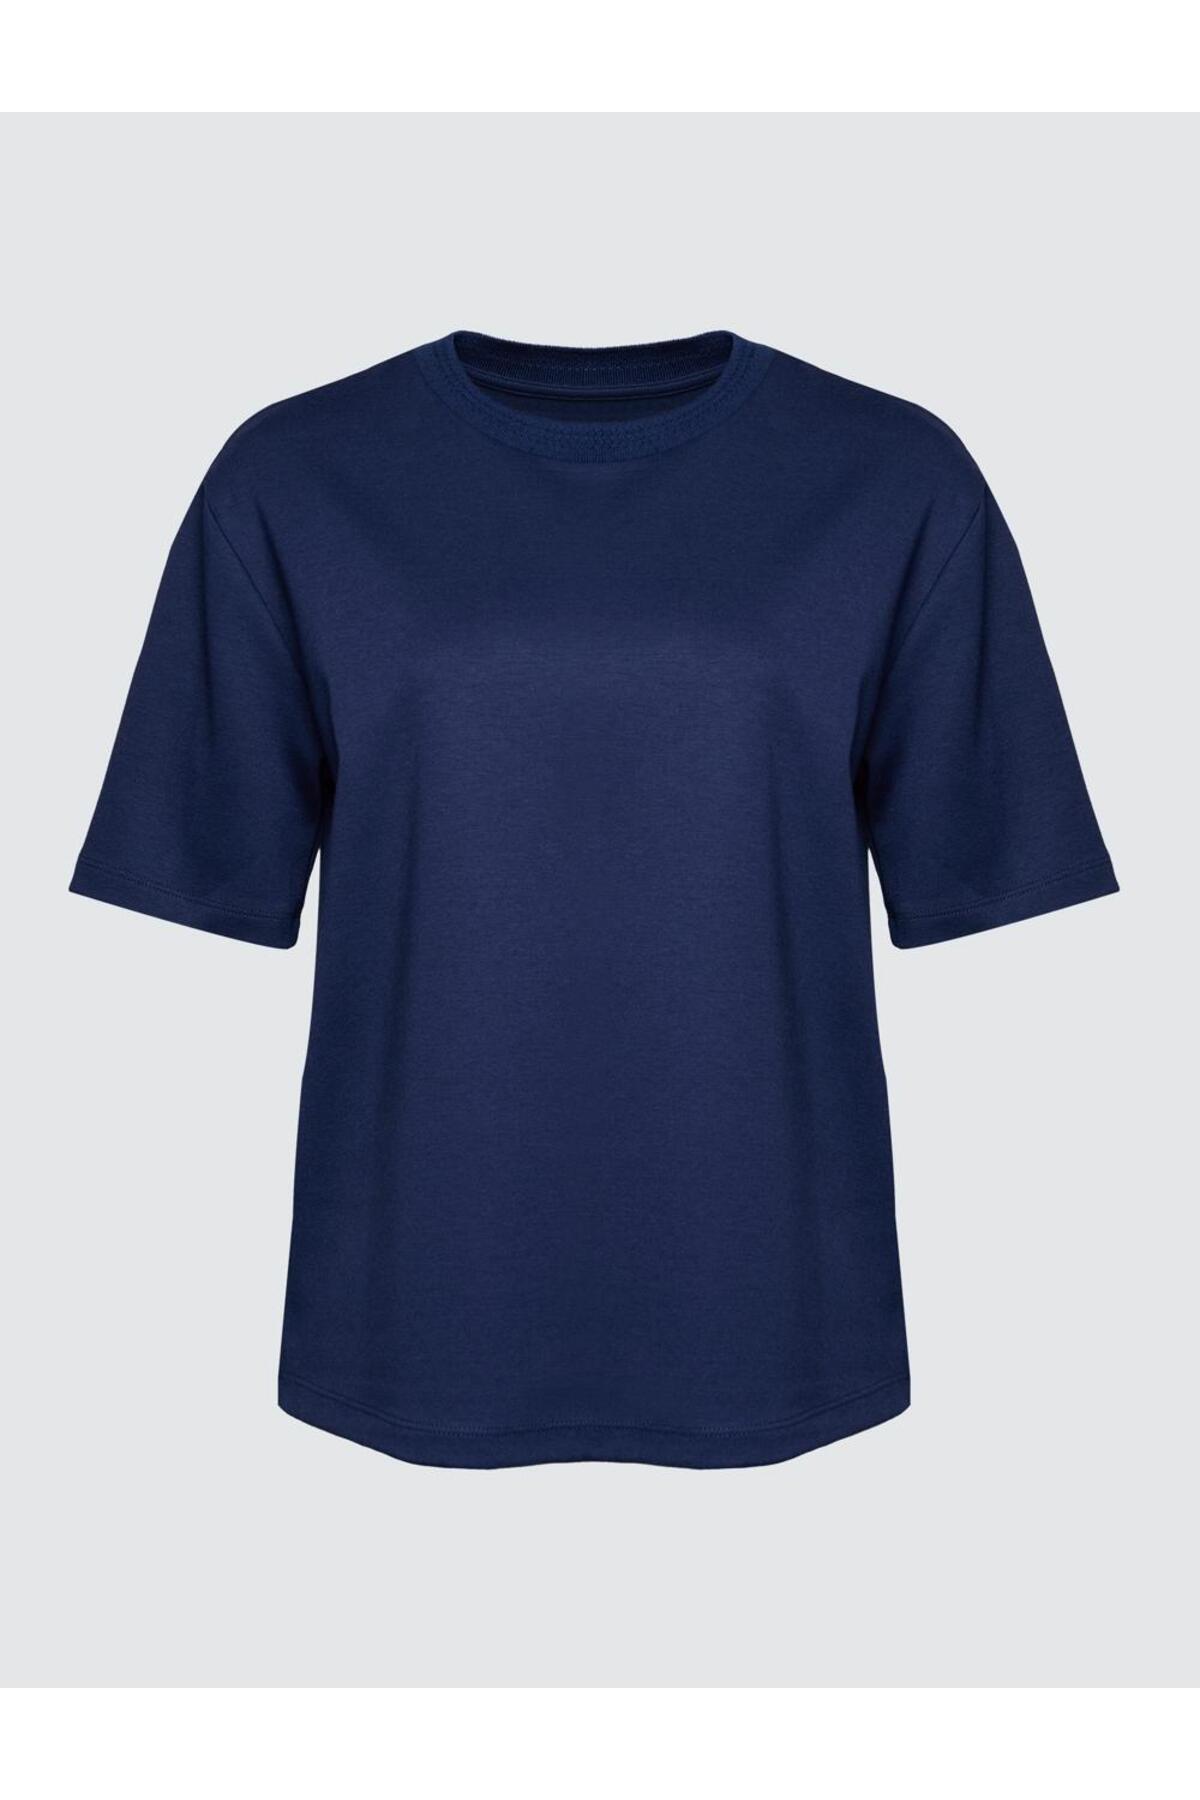 Jimmy Key Navy Blue Crew Neck Short Sleeve Oversize T-Shirt